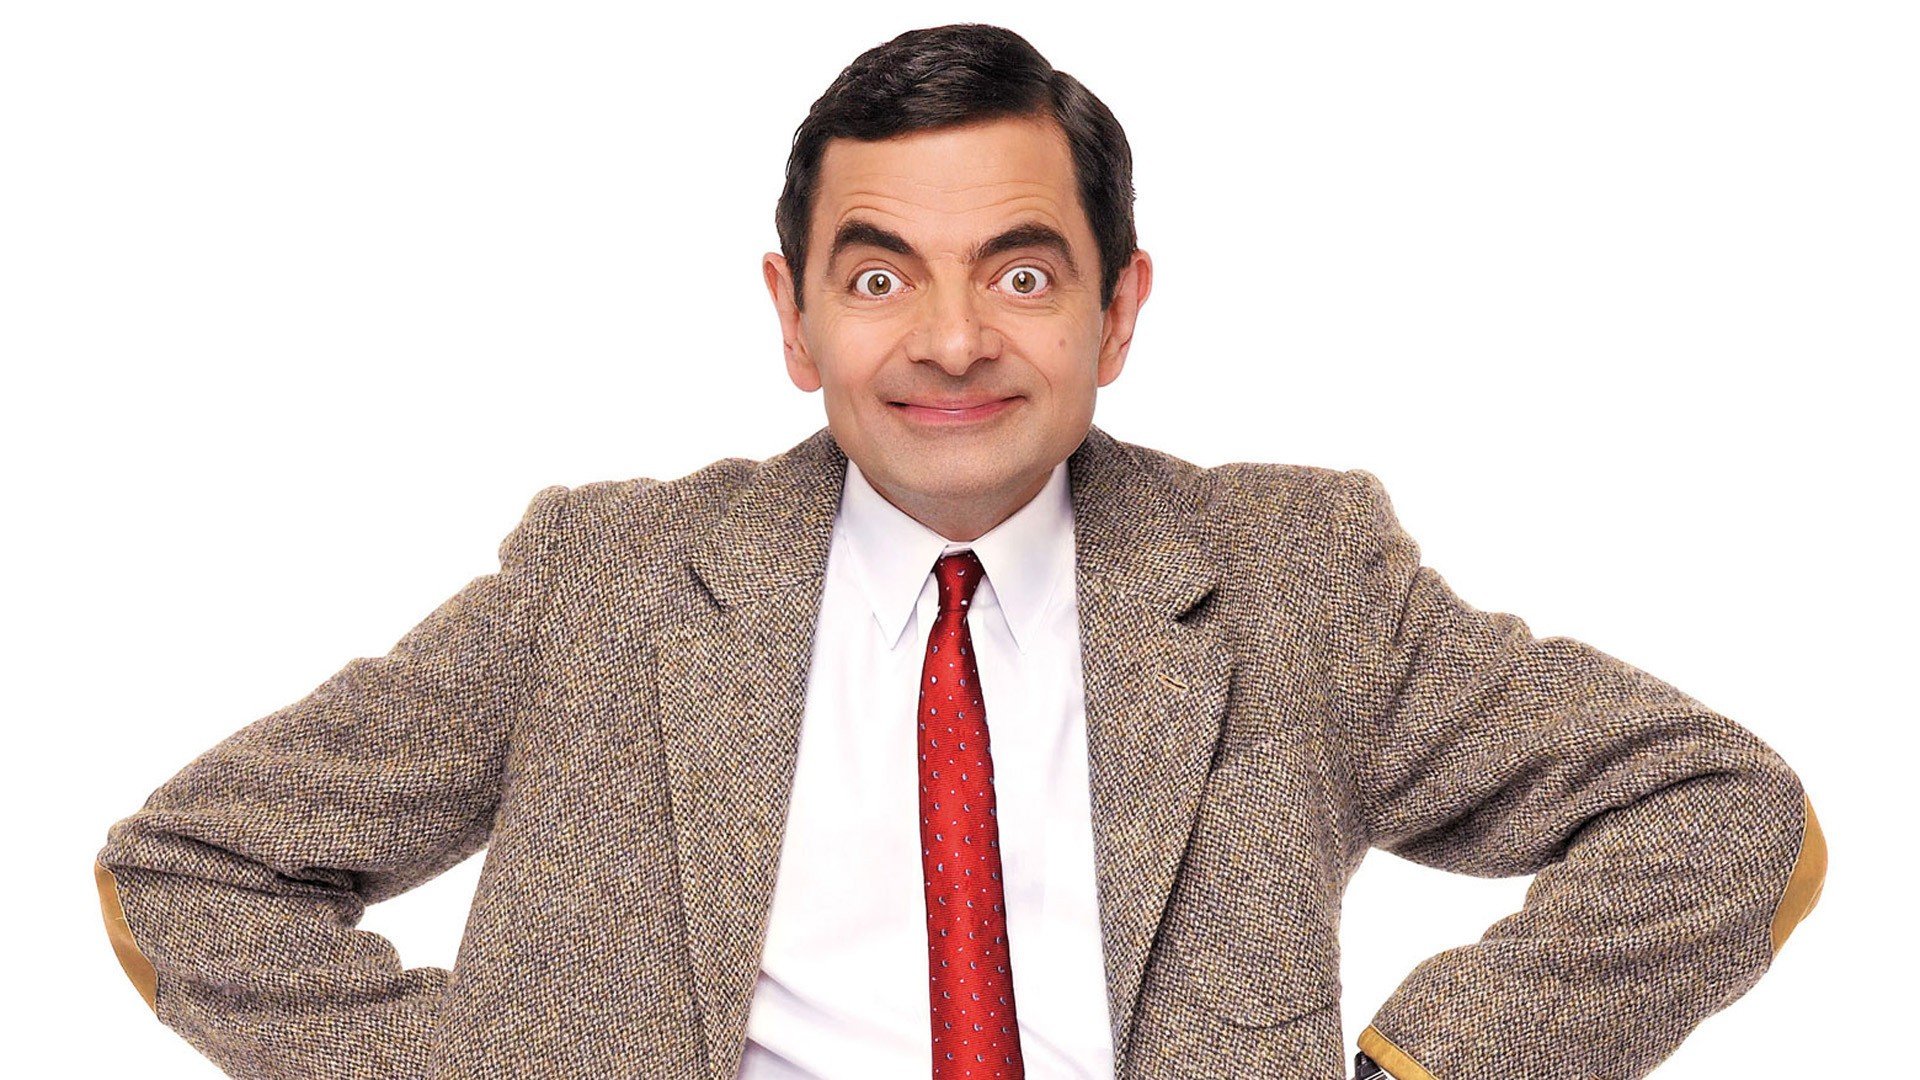 men, Actor, Rowan Atkinson, Mr. Bean, Smiling, Suits, Tie, White background Wallpaper